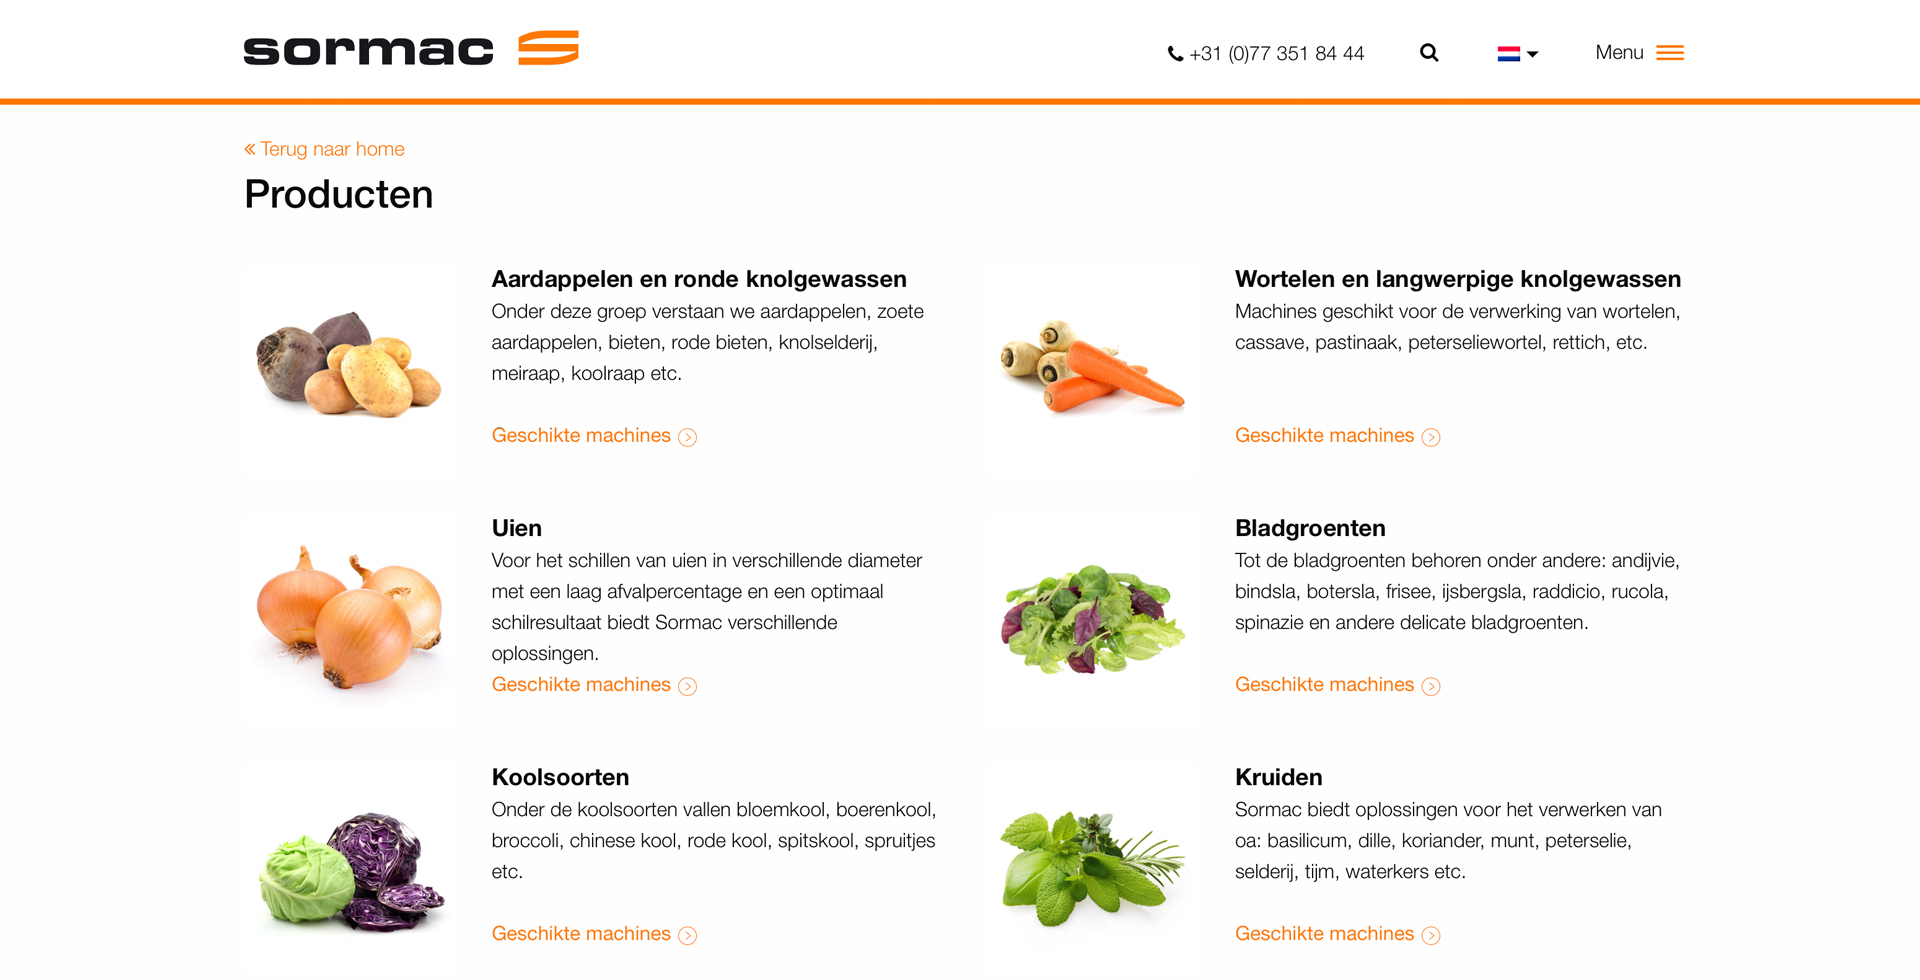 Spiegel crossmedia communicatie - Sormac website slide 2